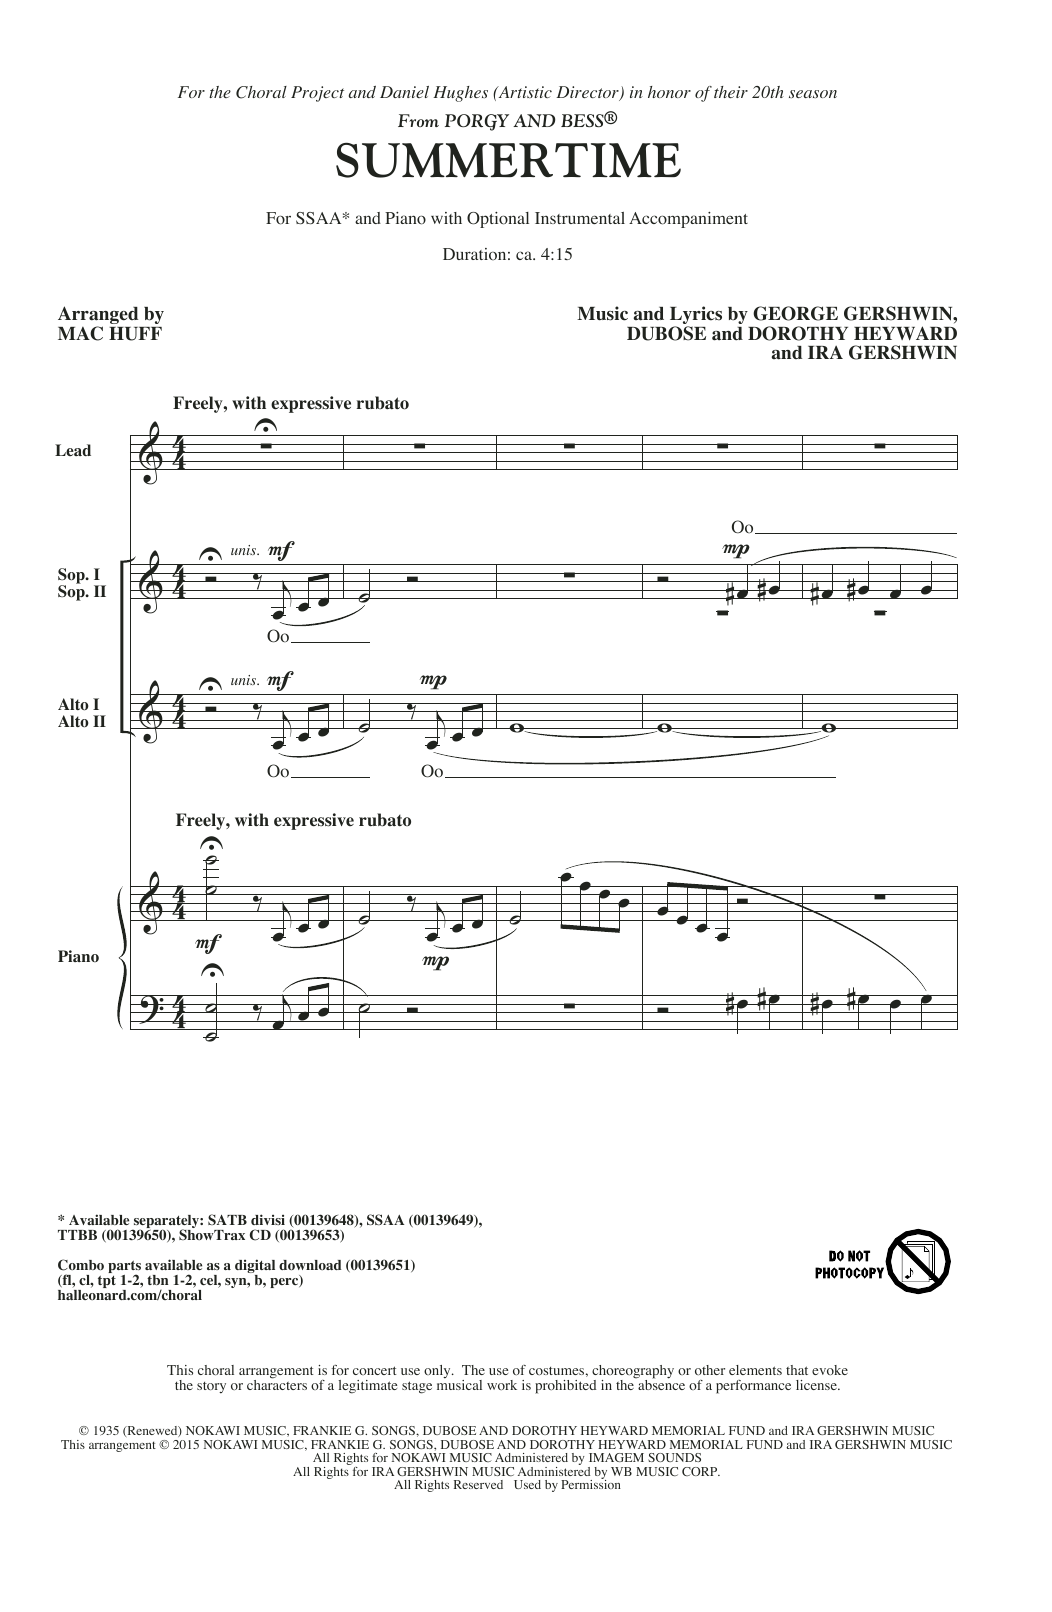 Mac Huff Summertime sheet music notes and chords arranged for SSA Choir